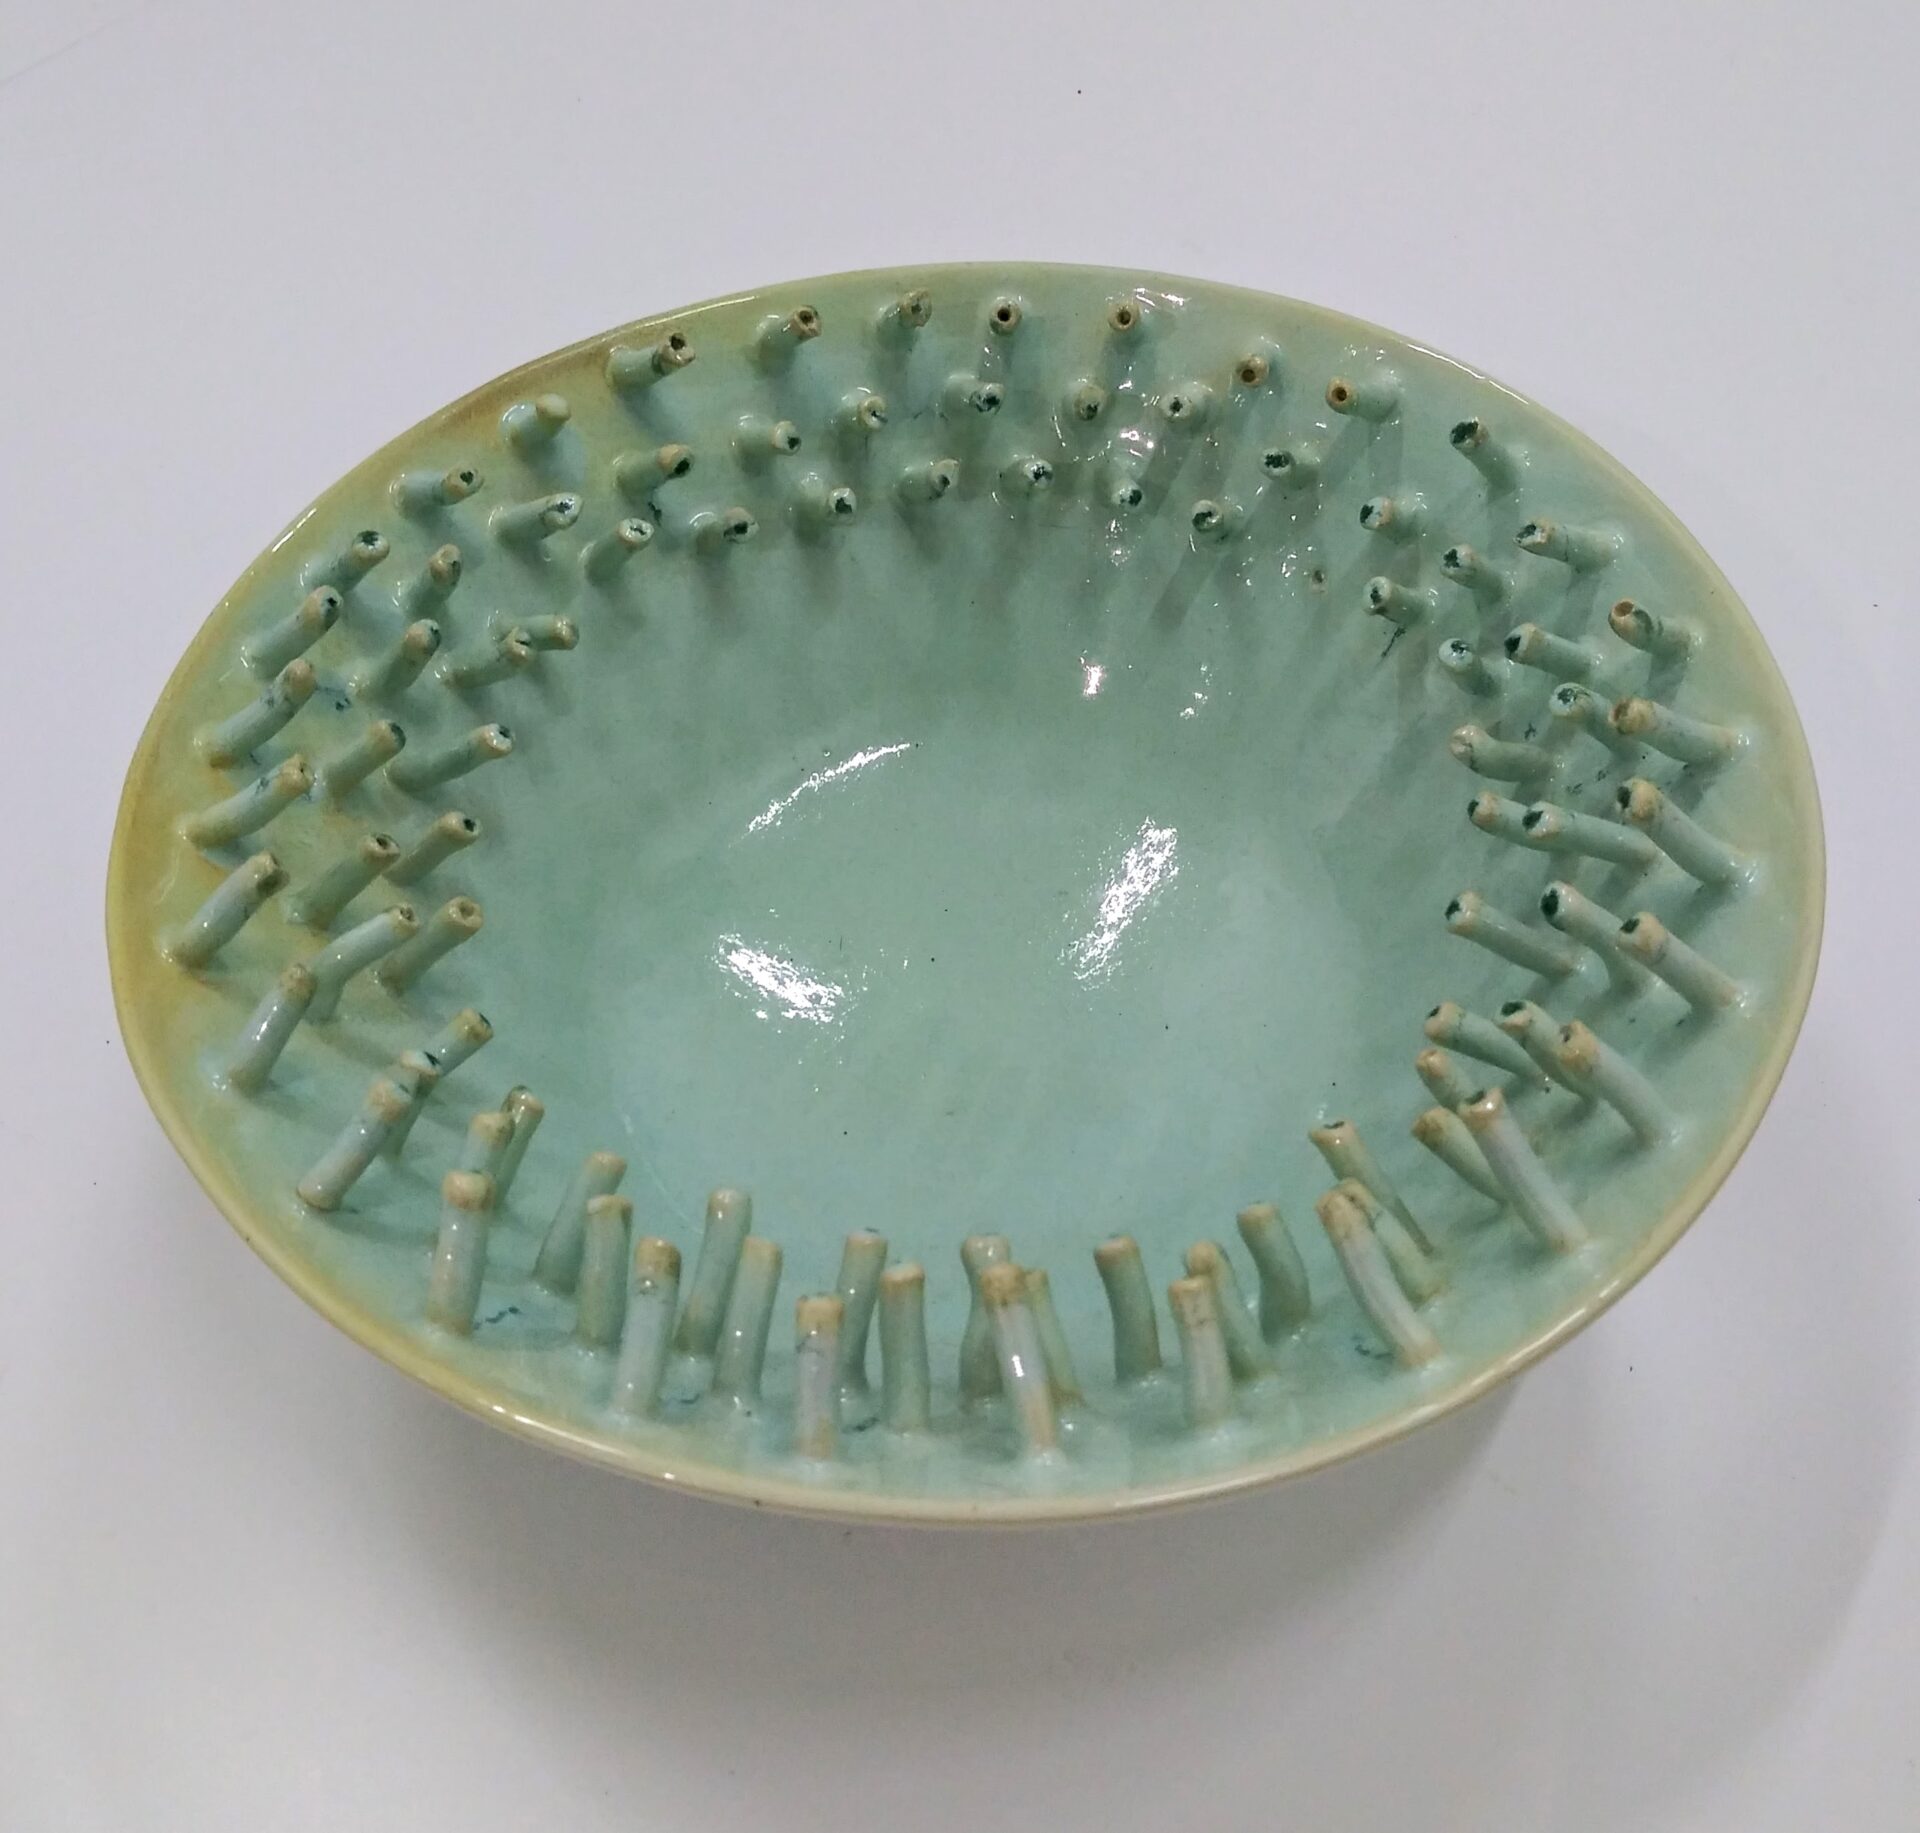 Aqua green round ceramic bowl full of thorns inside